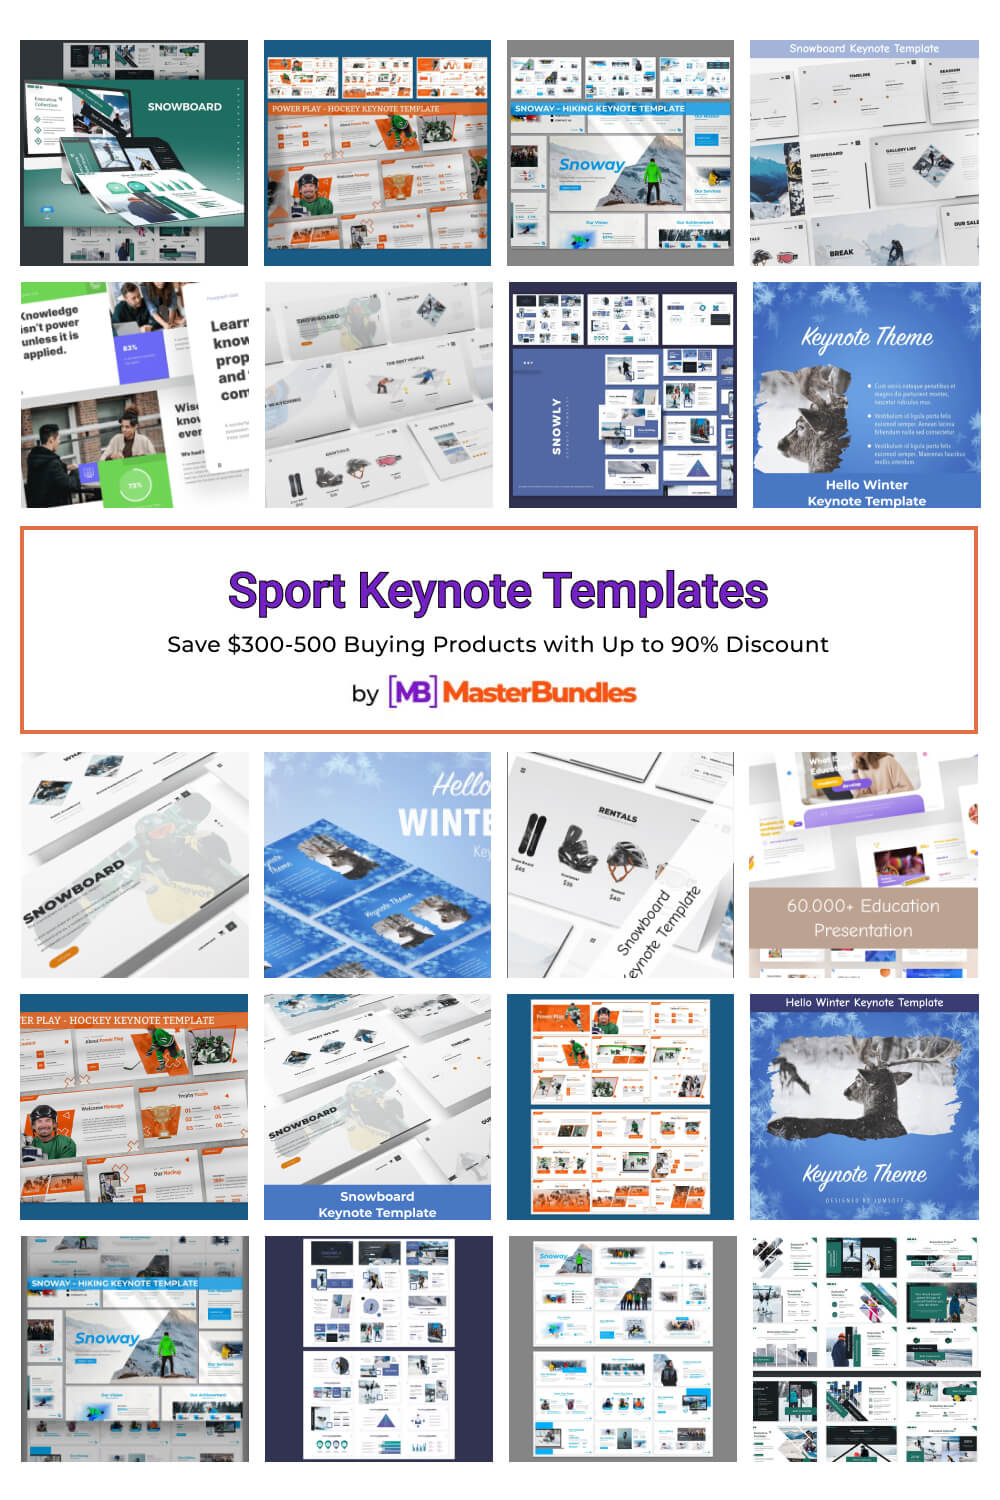 sport keynote templates pinterest image.